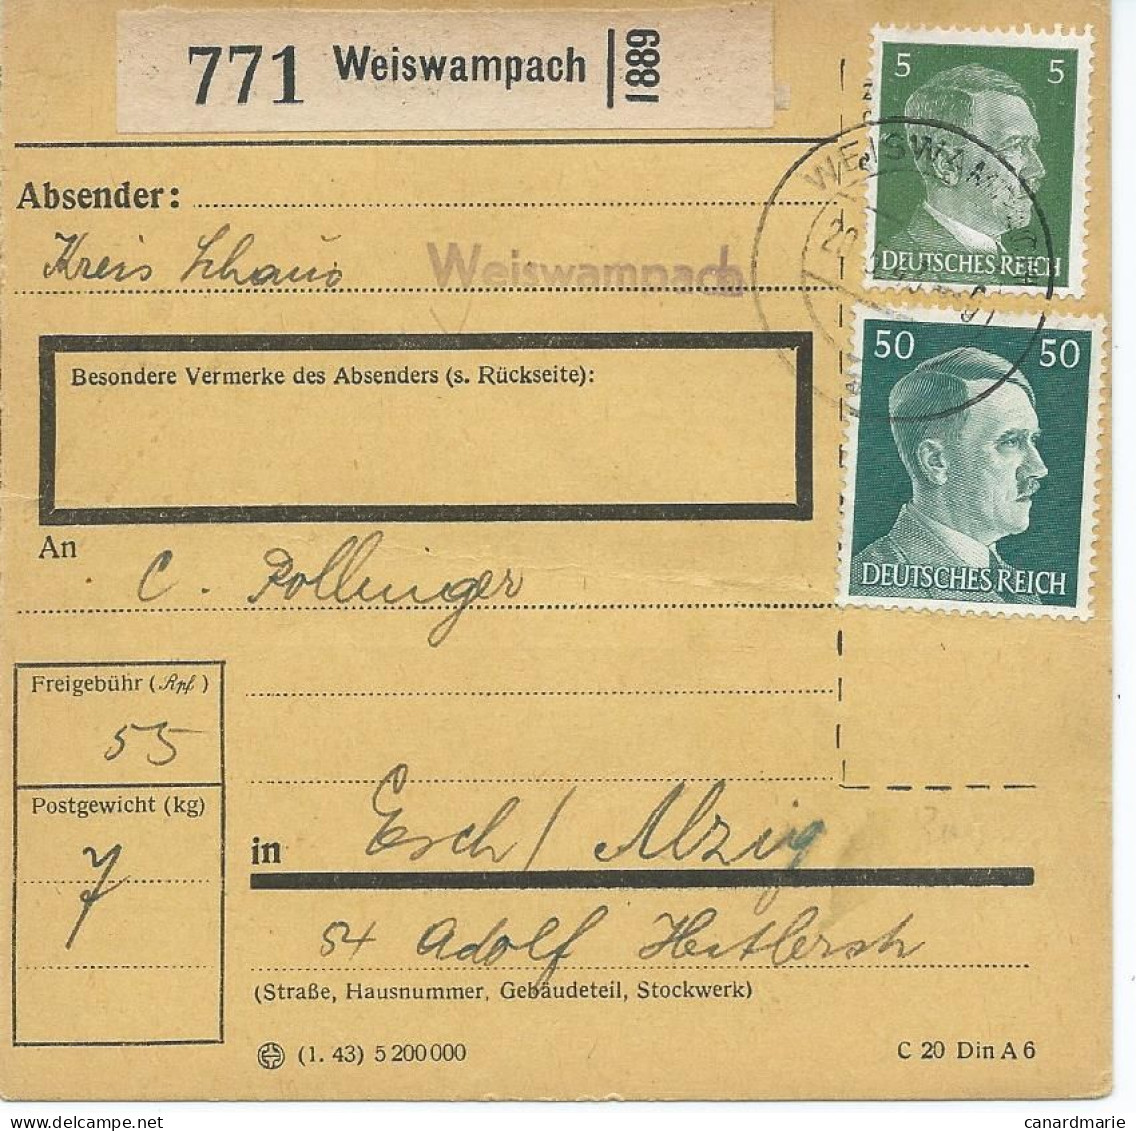 BULLETIN DE COLIS POSTAL 1943 AVEC ETIQUETTE DE WEISWAMPACH - 1940-1944 Deutsche Besatzung